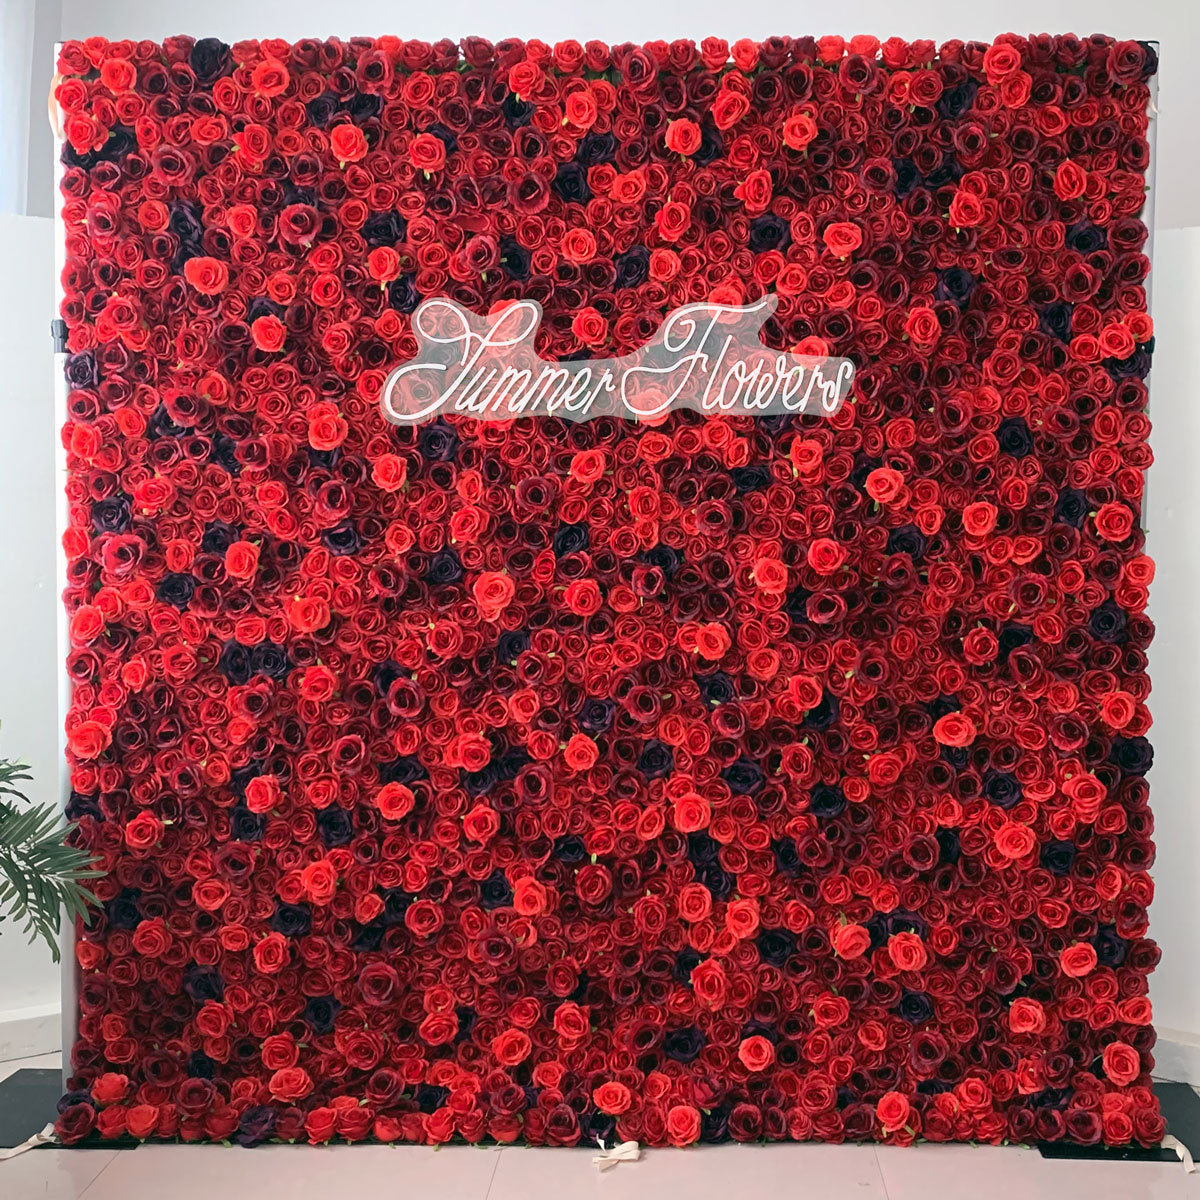 Summer Flower:CB-165 8ft*8ft Cloth Back Artificial Flower Wall Backdrop